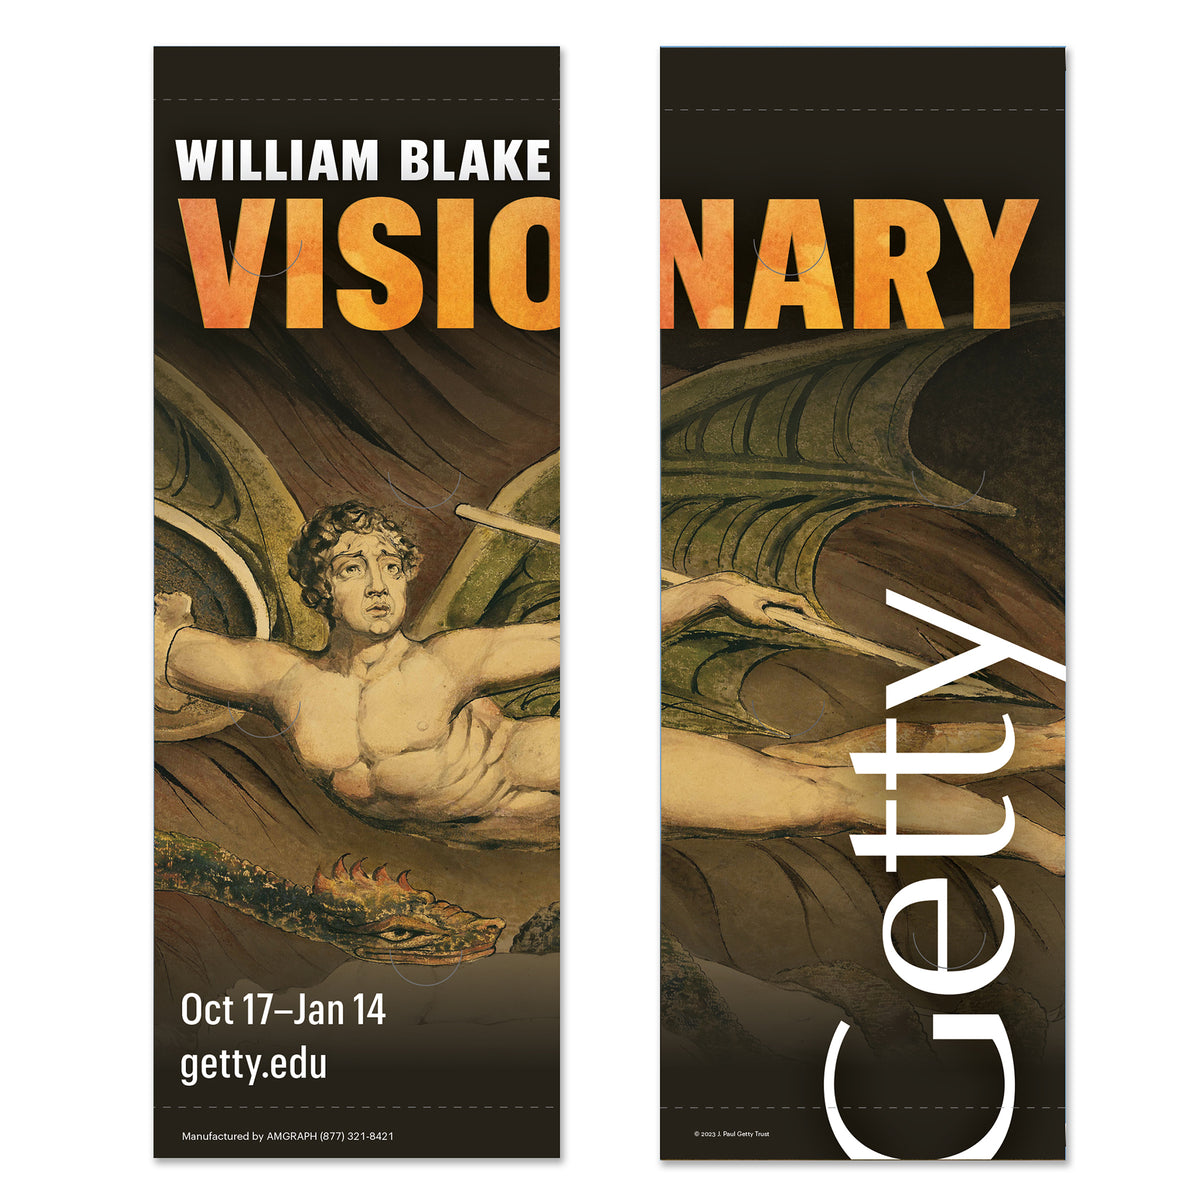 Getty Exhibition Street Banner (set of 2) - William Blake Visionary